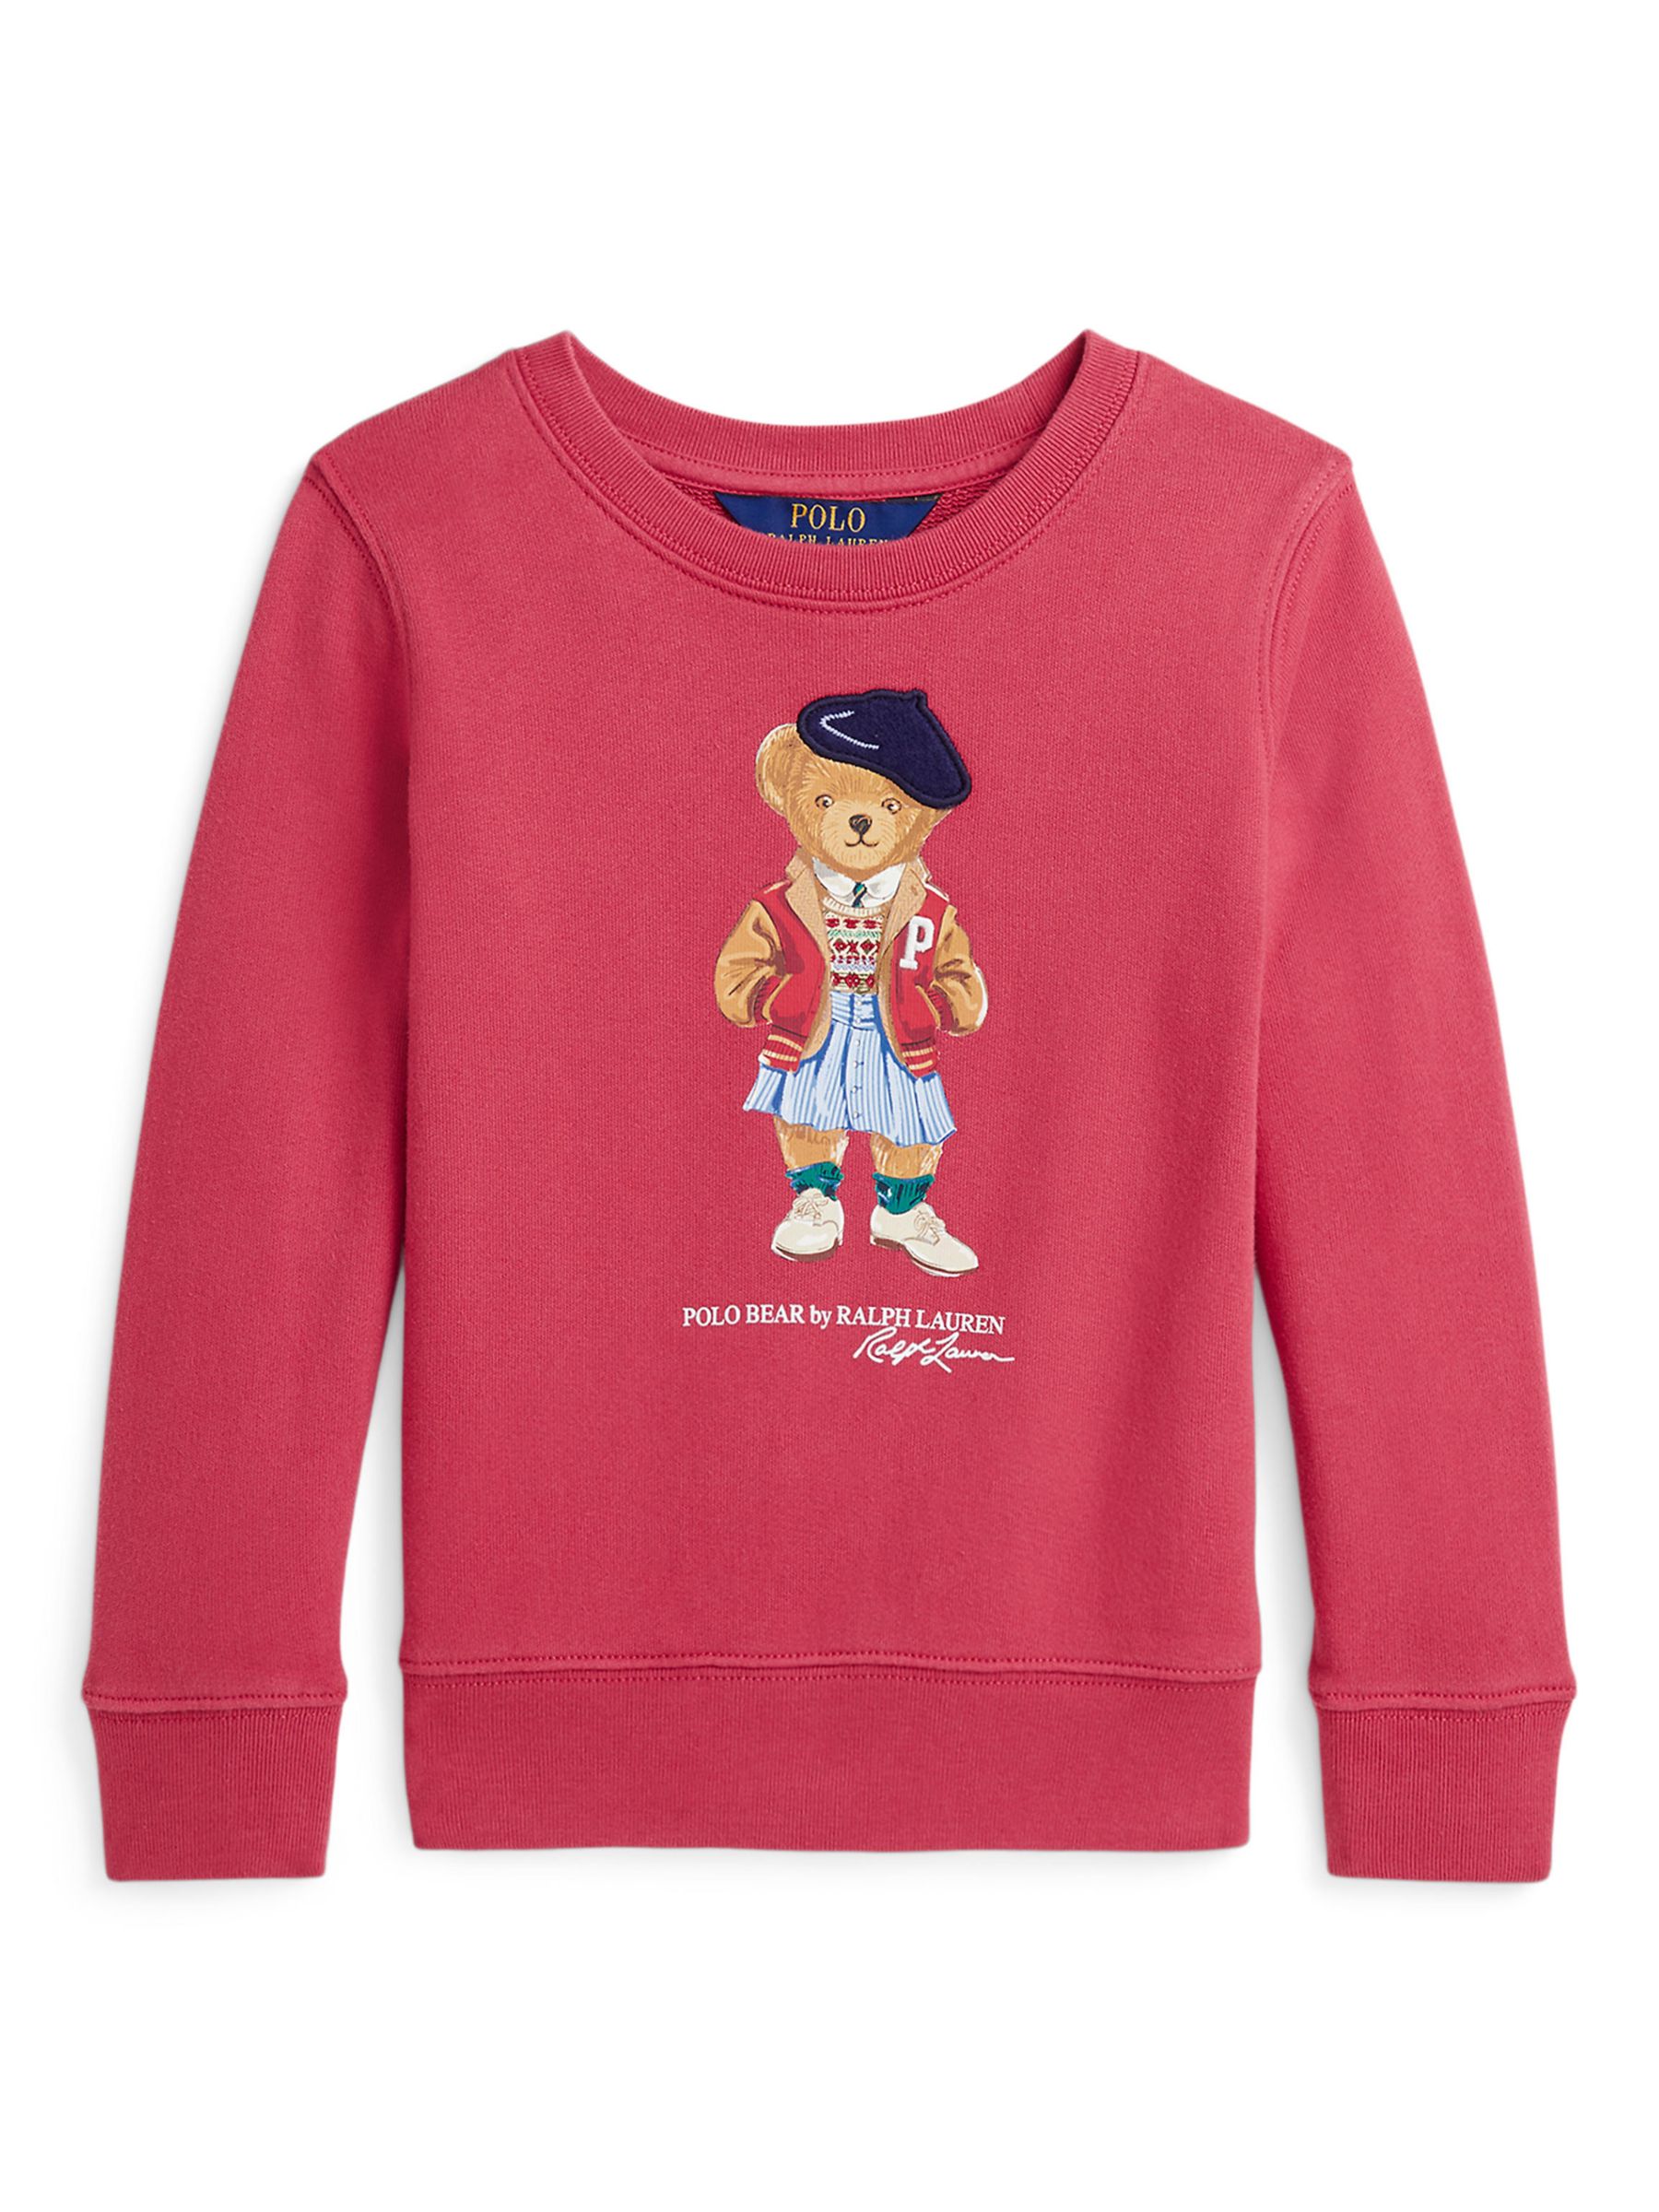 Ralph Lauren Kids' Polo Bear Fleece Sweatshirt, Nantucket Red, L